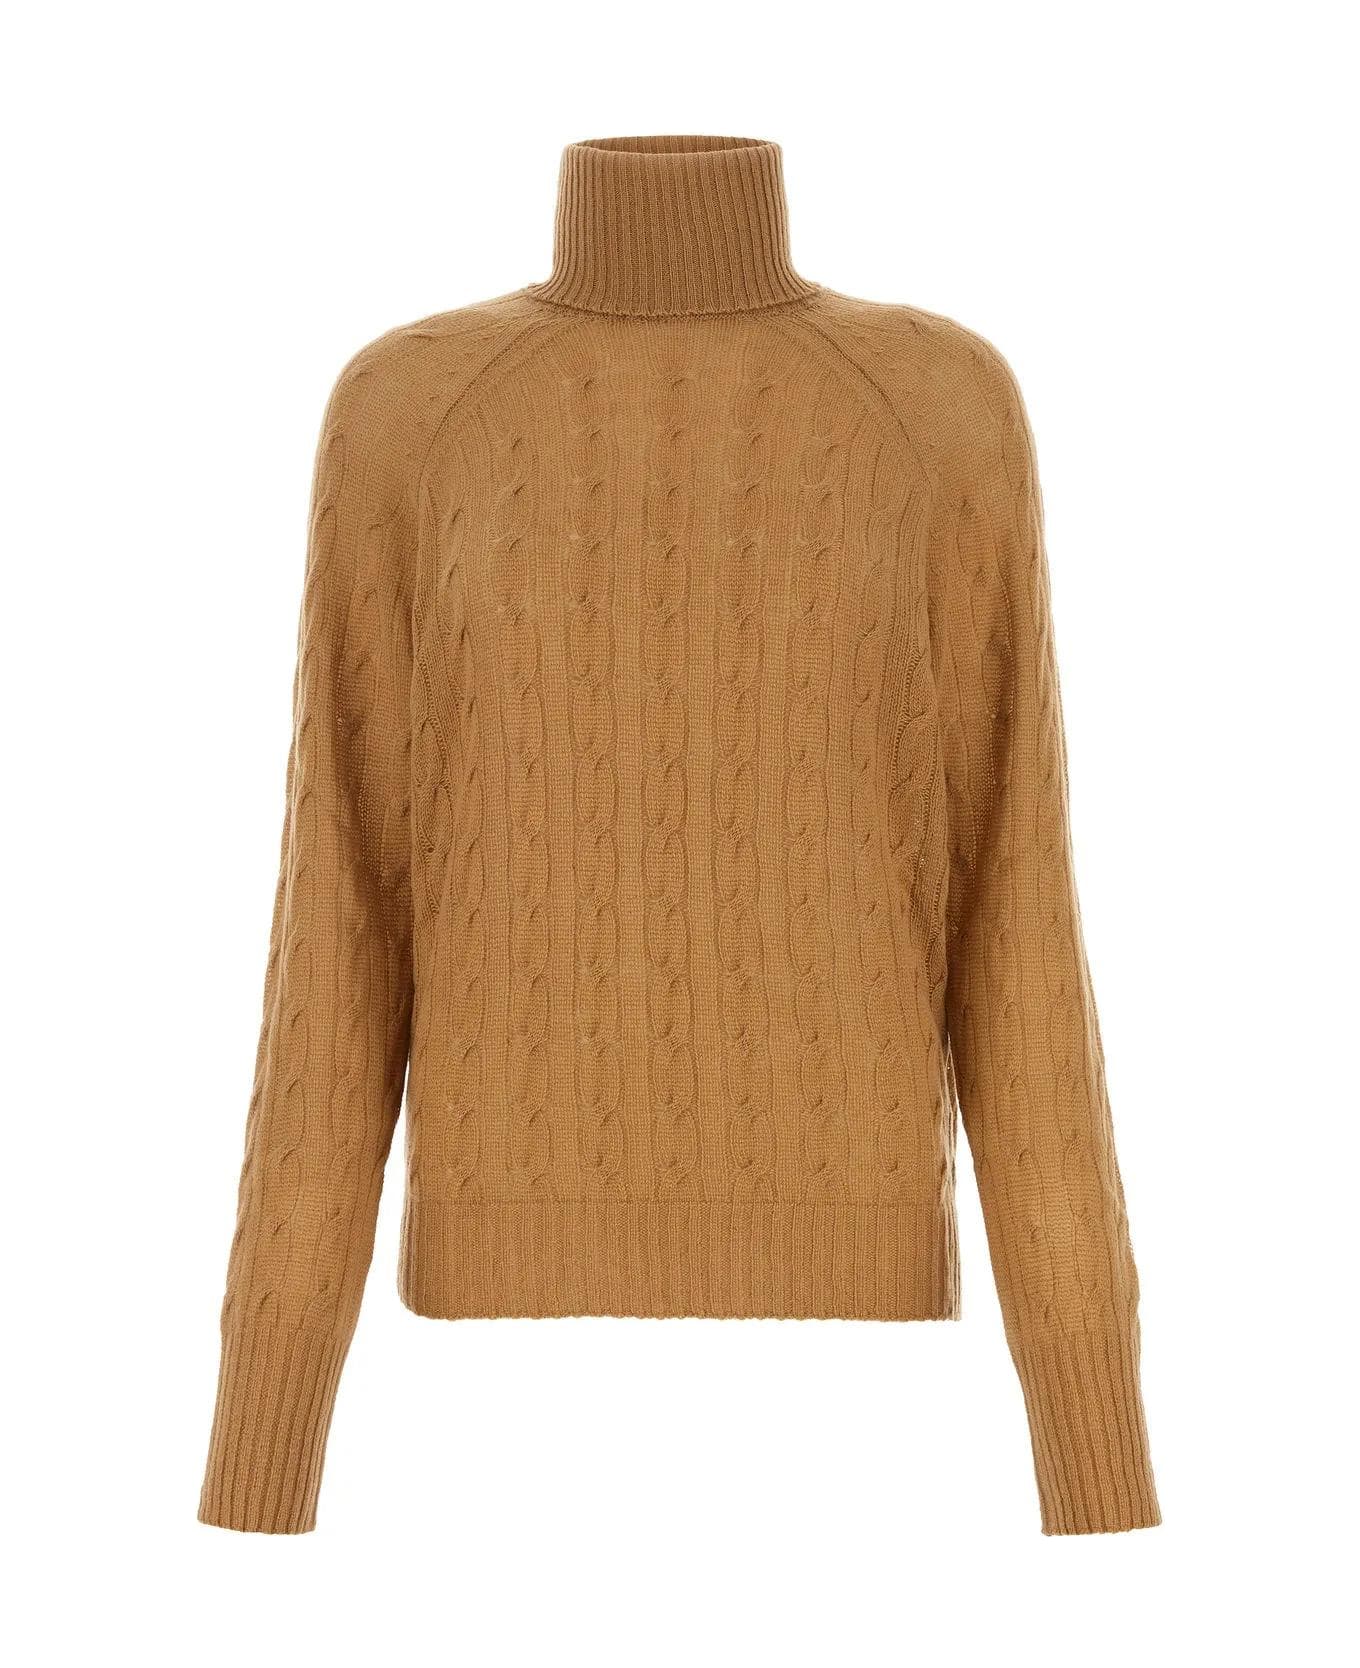 Etro Biscuit Cashmere Sweater - BROWN